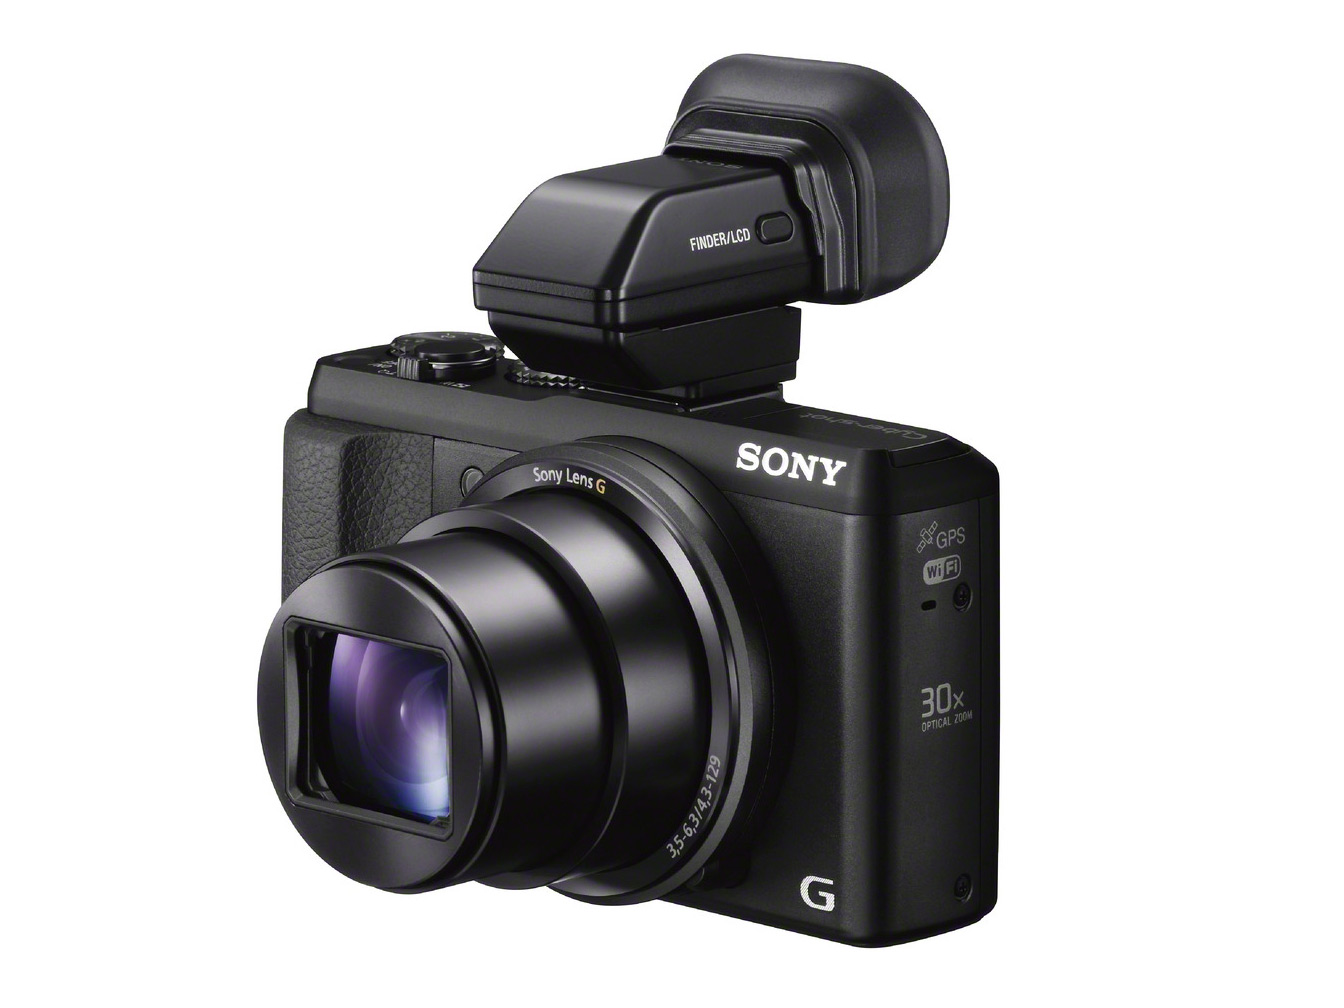 Sony Cyber-shot DSC-HX50V Price, Specs, Release Date, Where to Buy